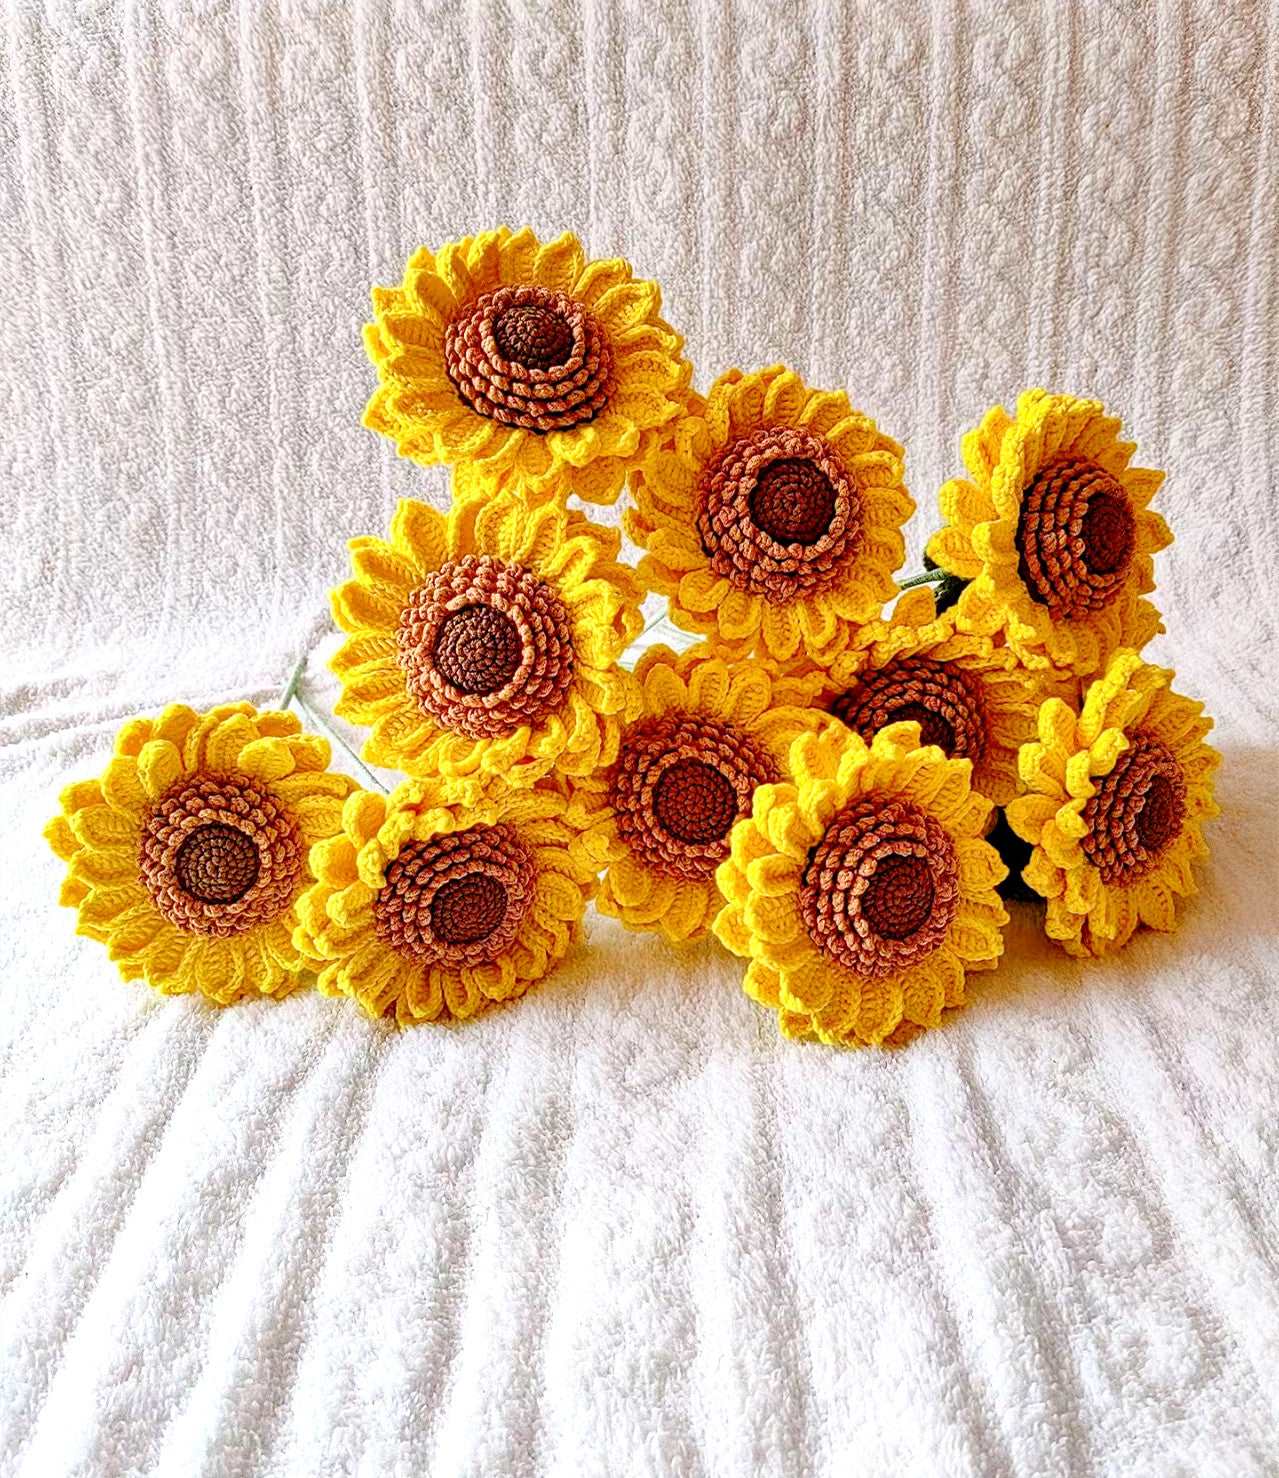 Sunflower Floral Arrangement for Special Events